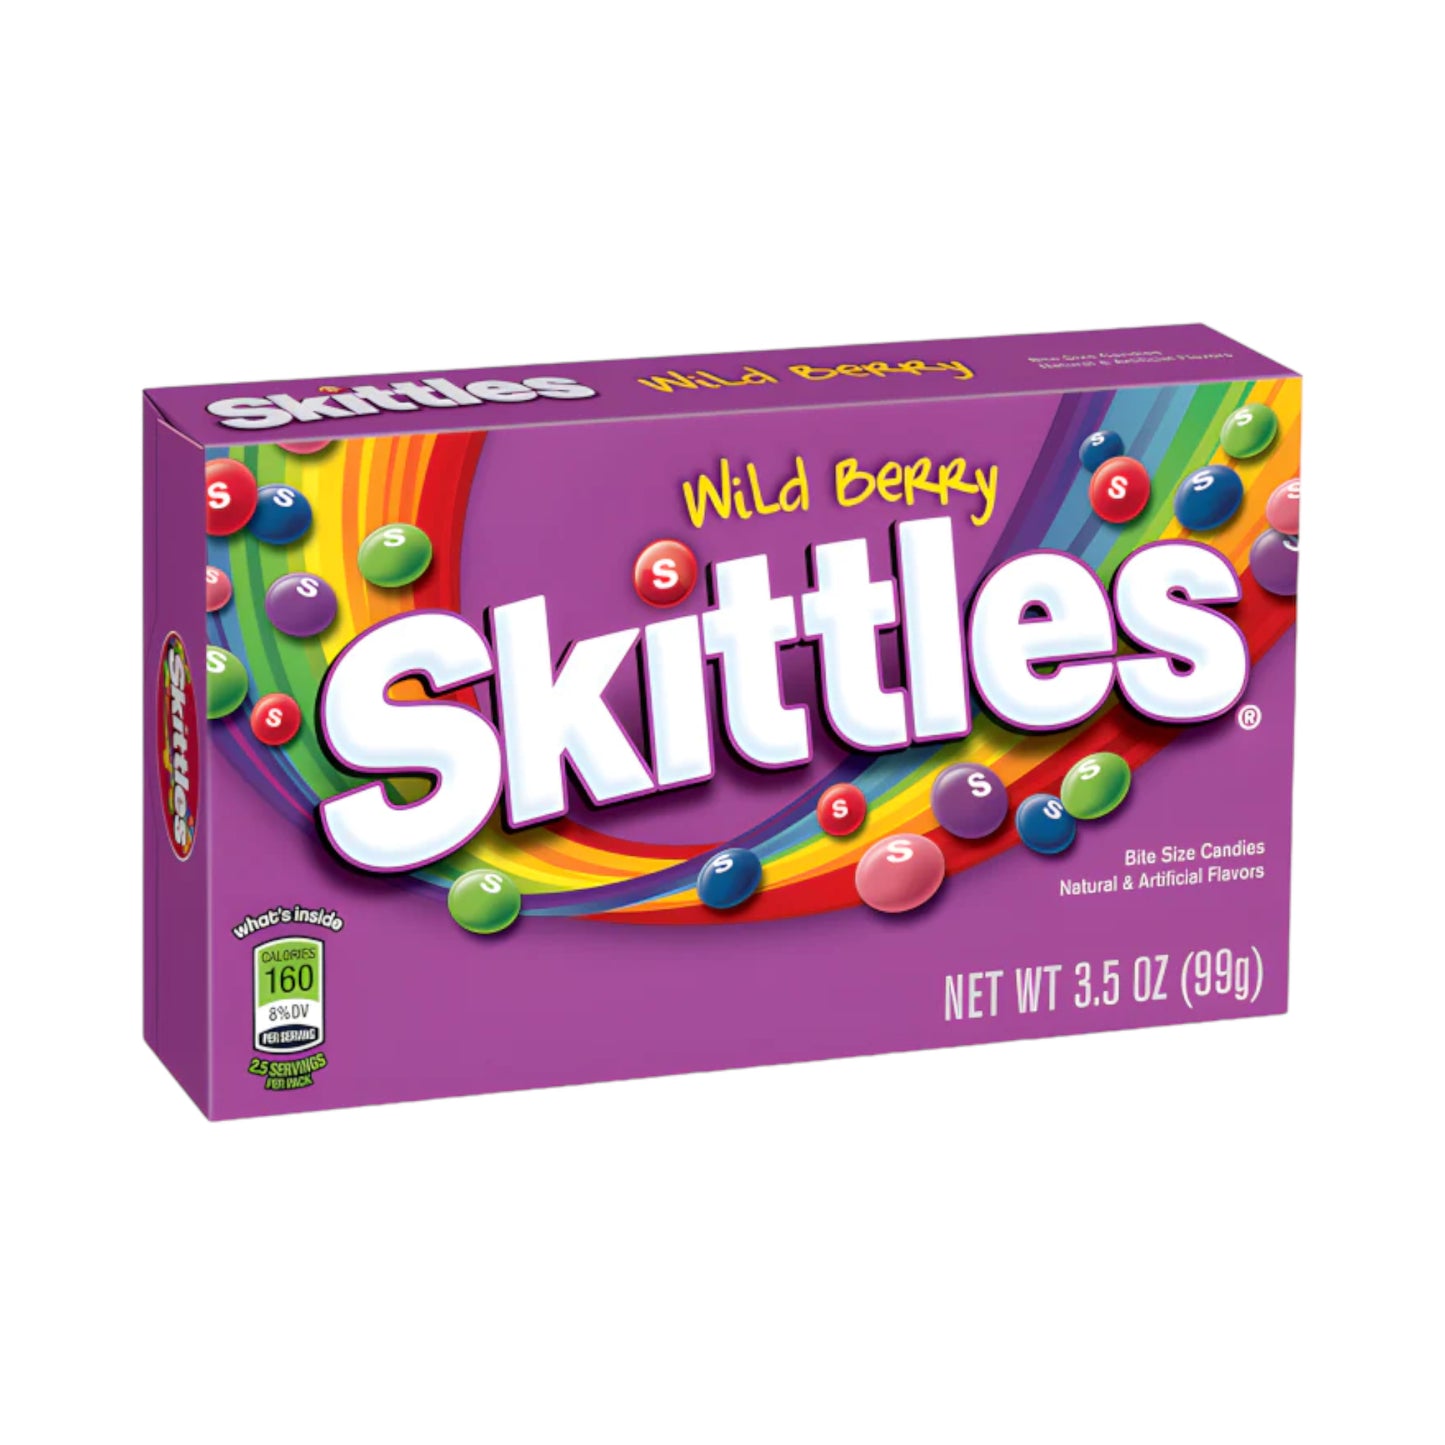 Skittles Wild Berry - 3.5oz (99g) - Theatre Box